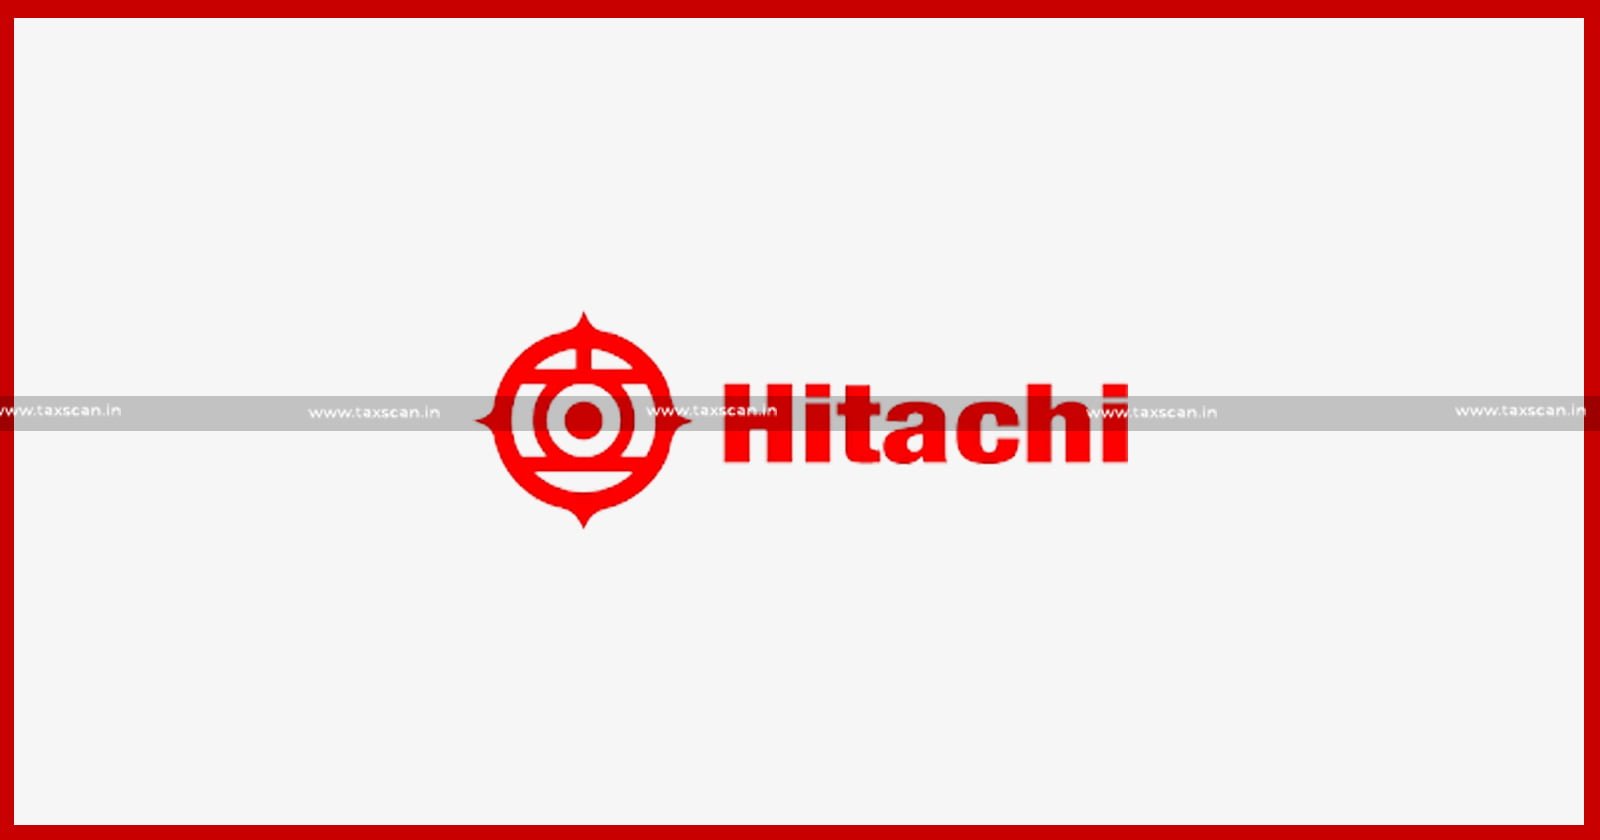 MBA Vacancy in Hitachi - B com vacancy in Hitachi - Hitachi - Hitachi careers - TAXSCAN